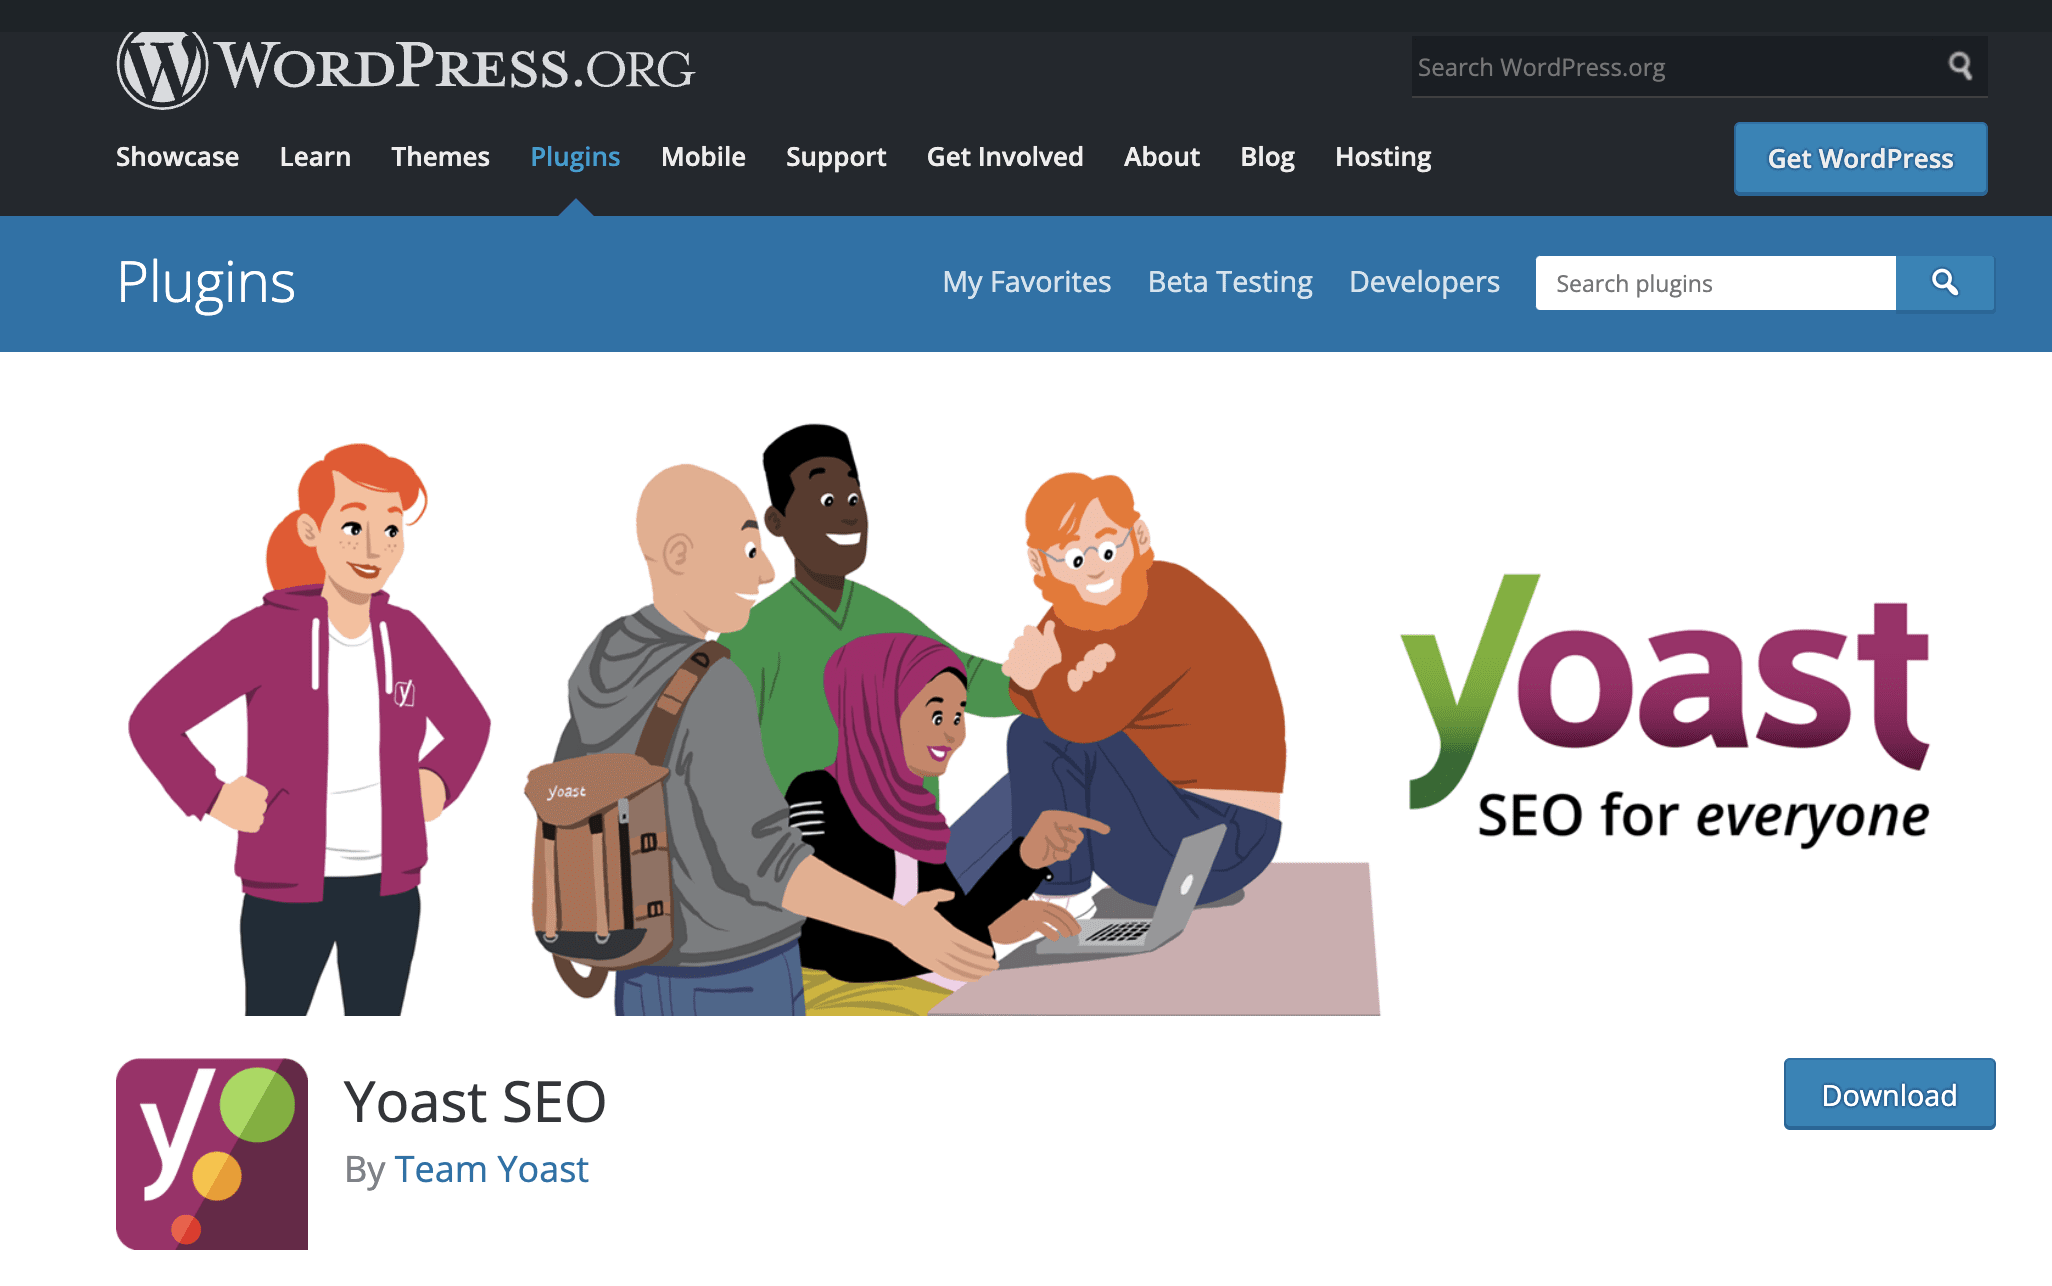 WordPress SEO by Yoast